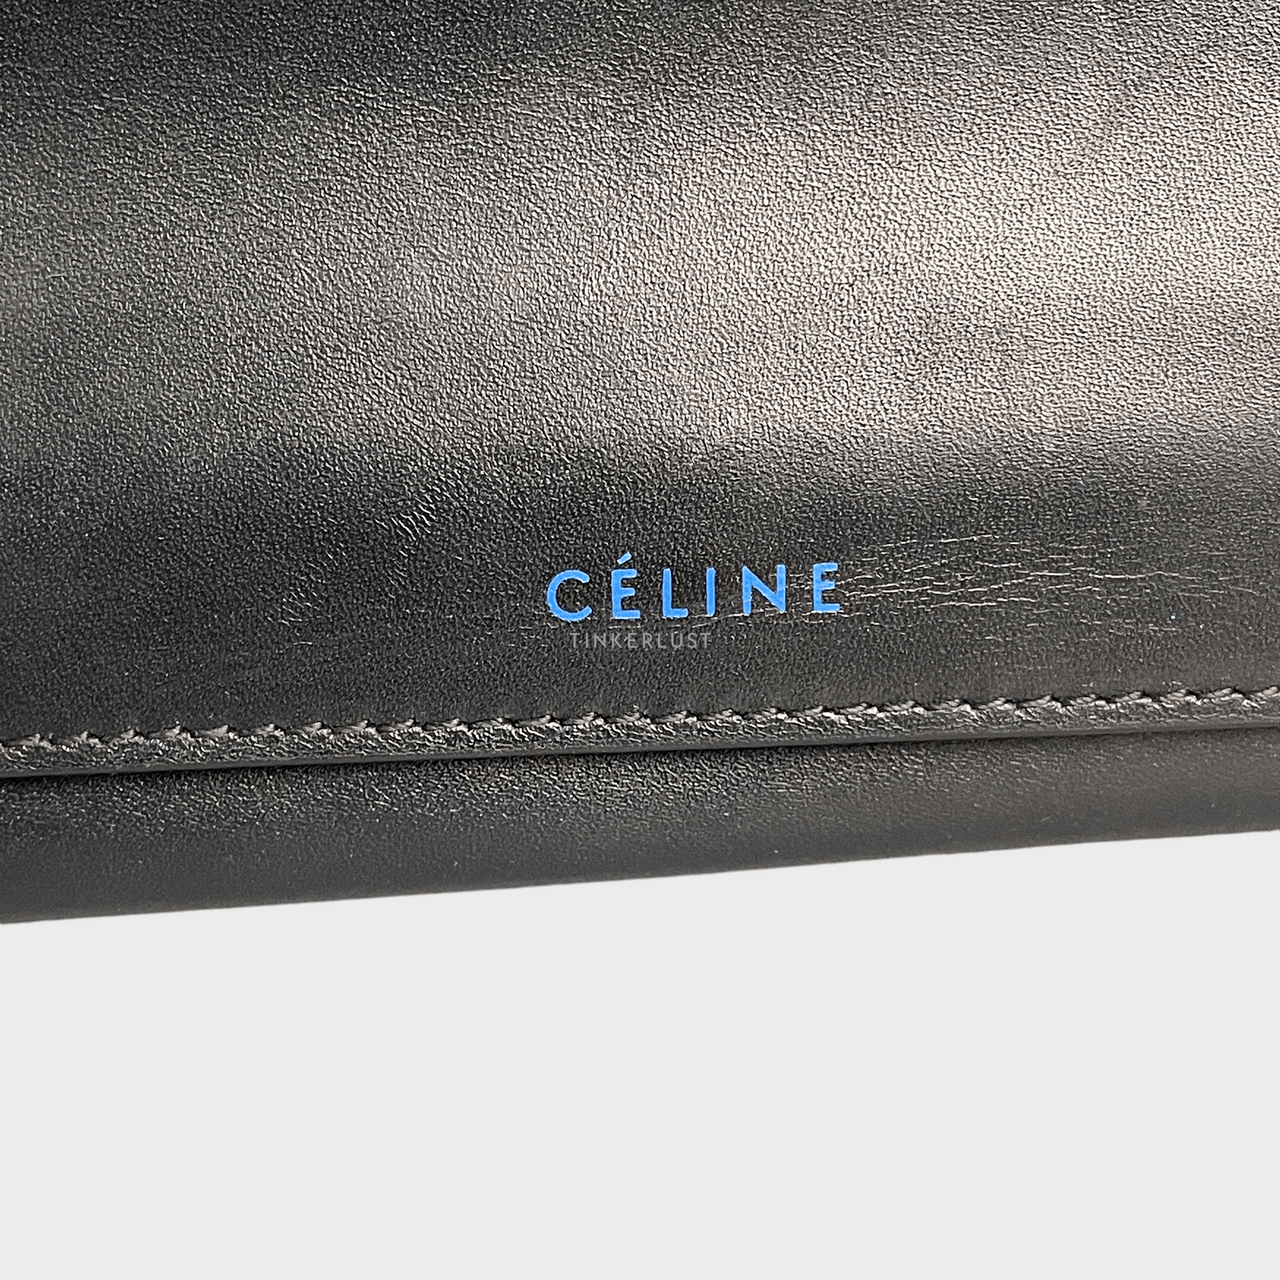 Celine Black Flap Wallet 